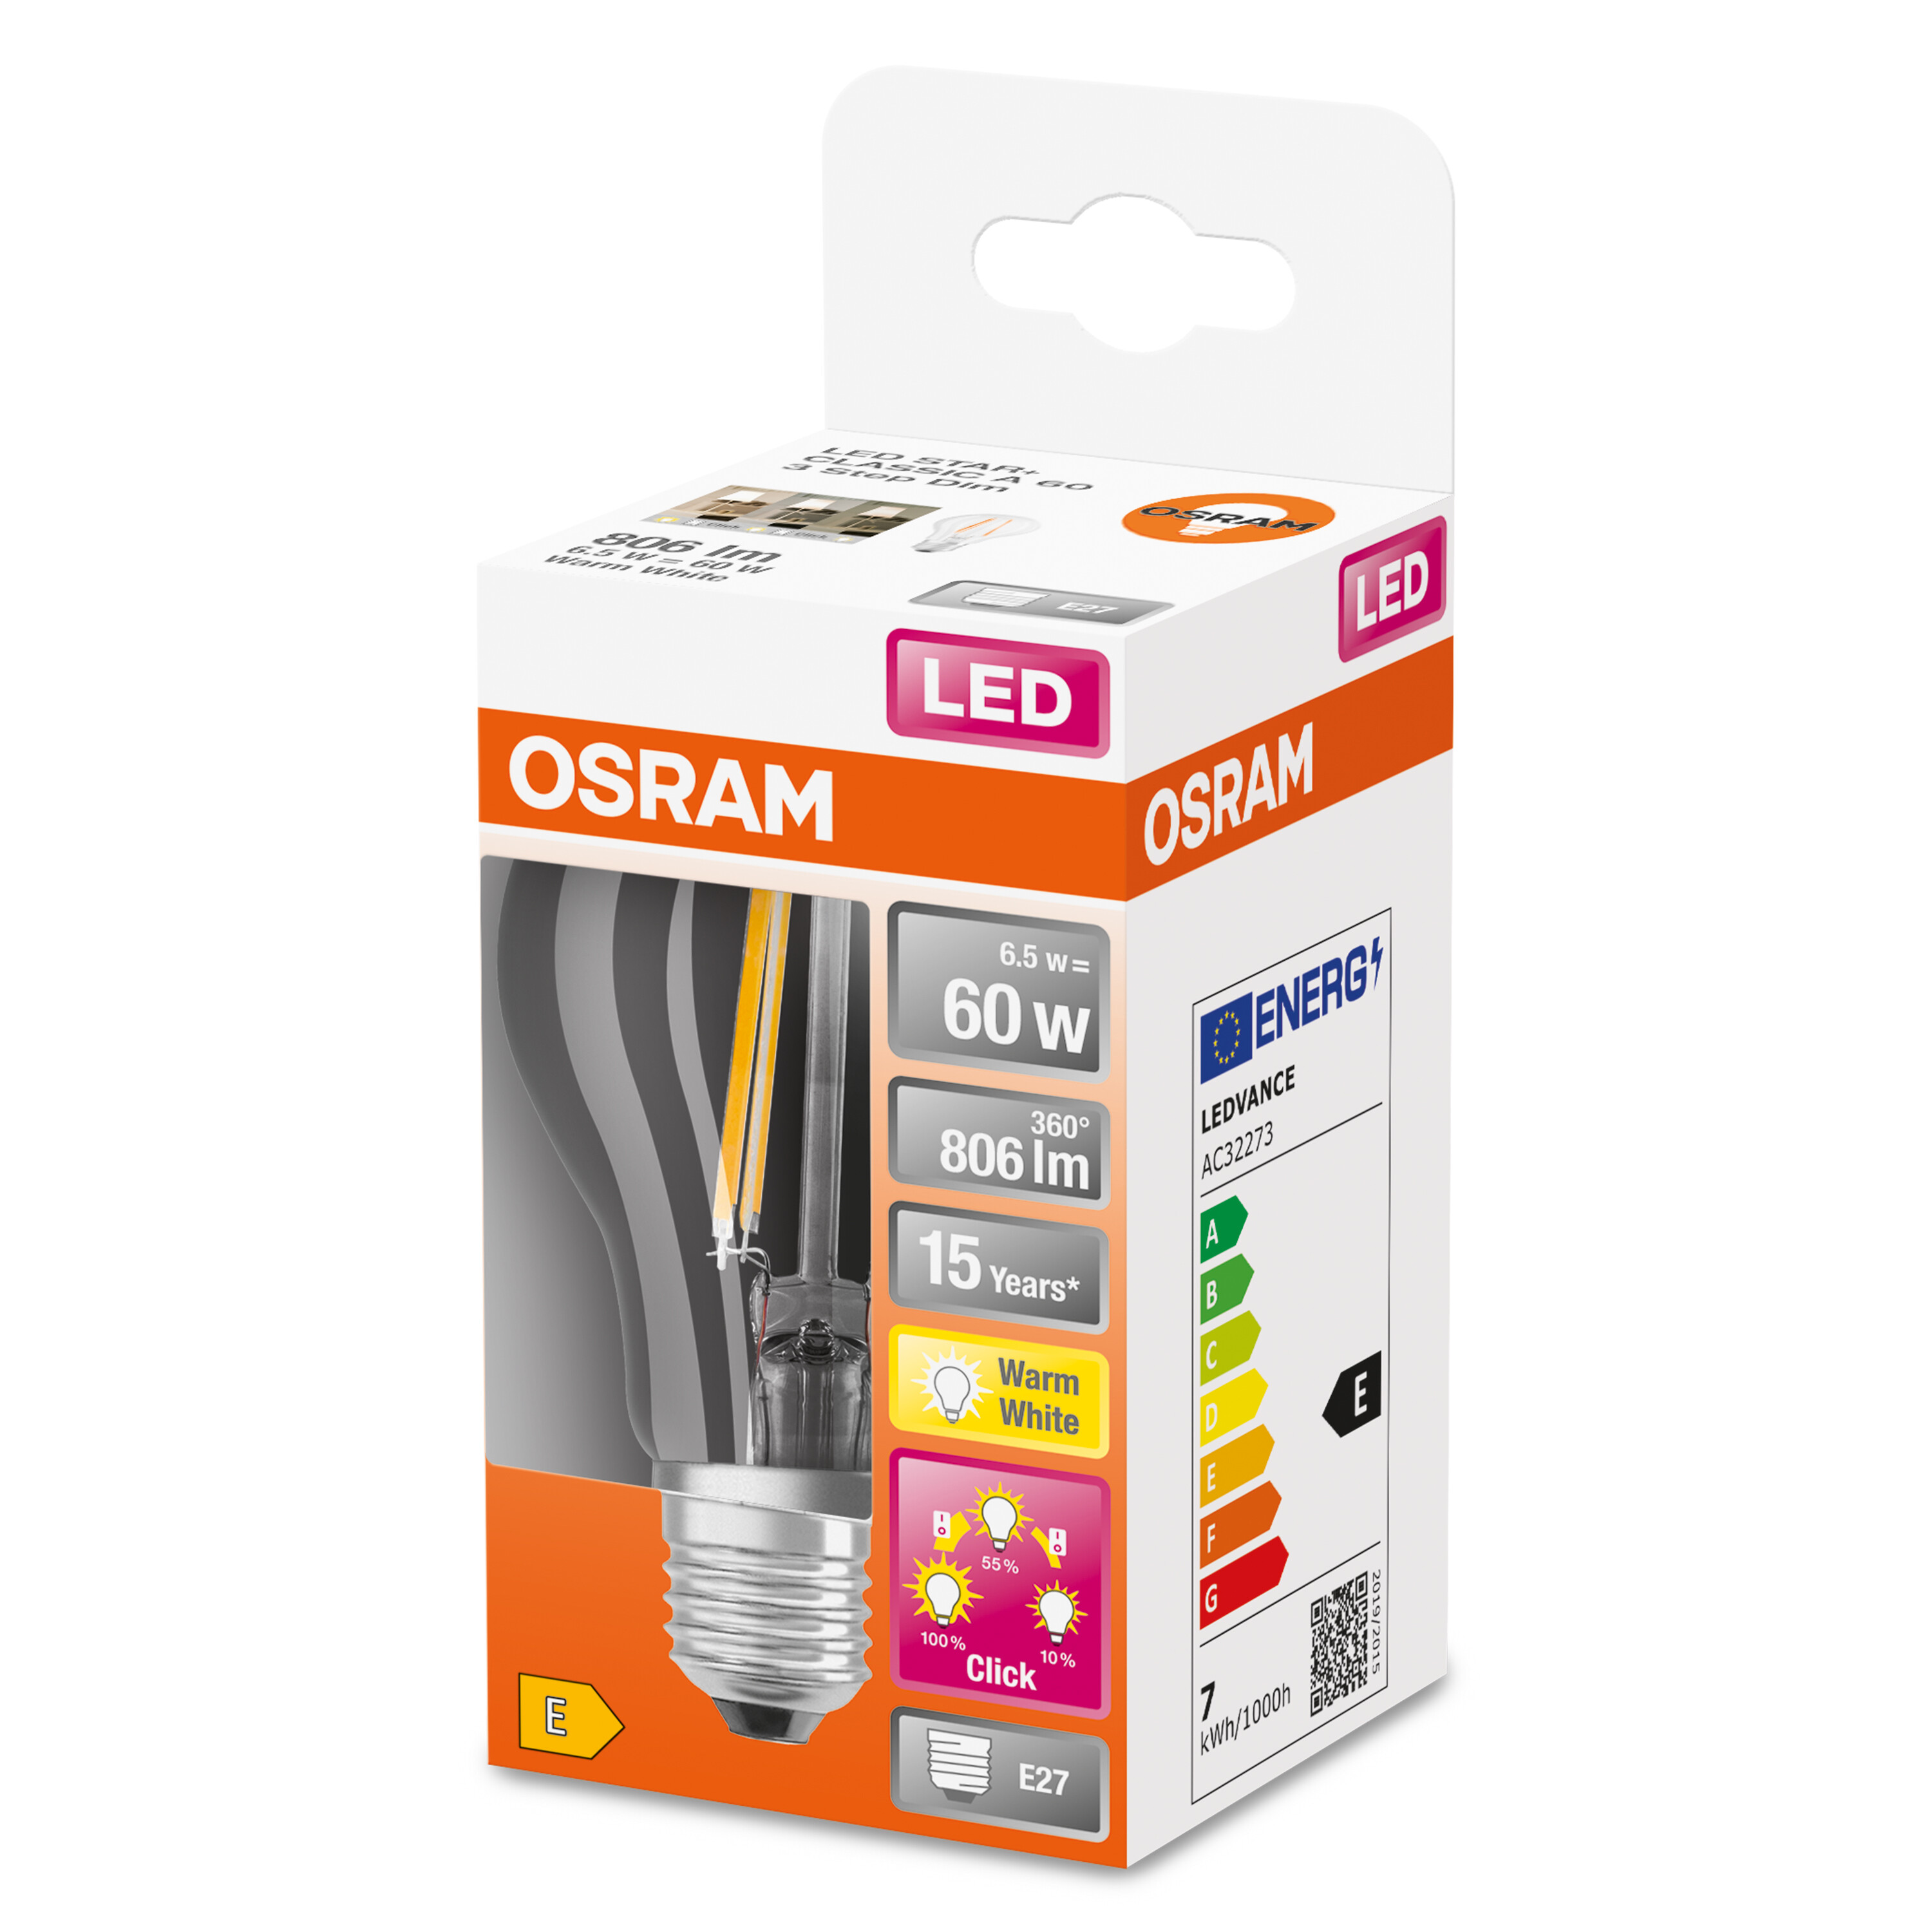 OSRAM  LED THREE A 806 Lumen Lampe DIM Warmweiß LED STEP CLASSIC